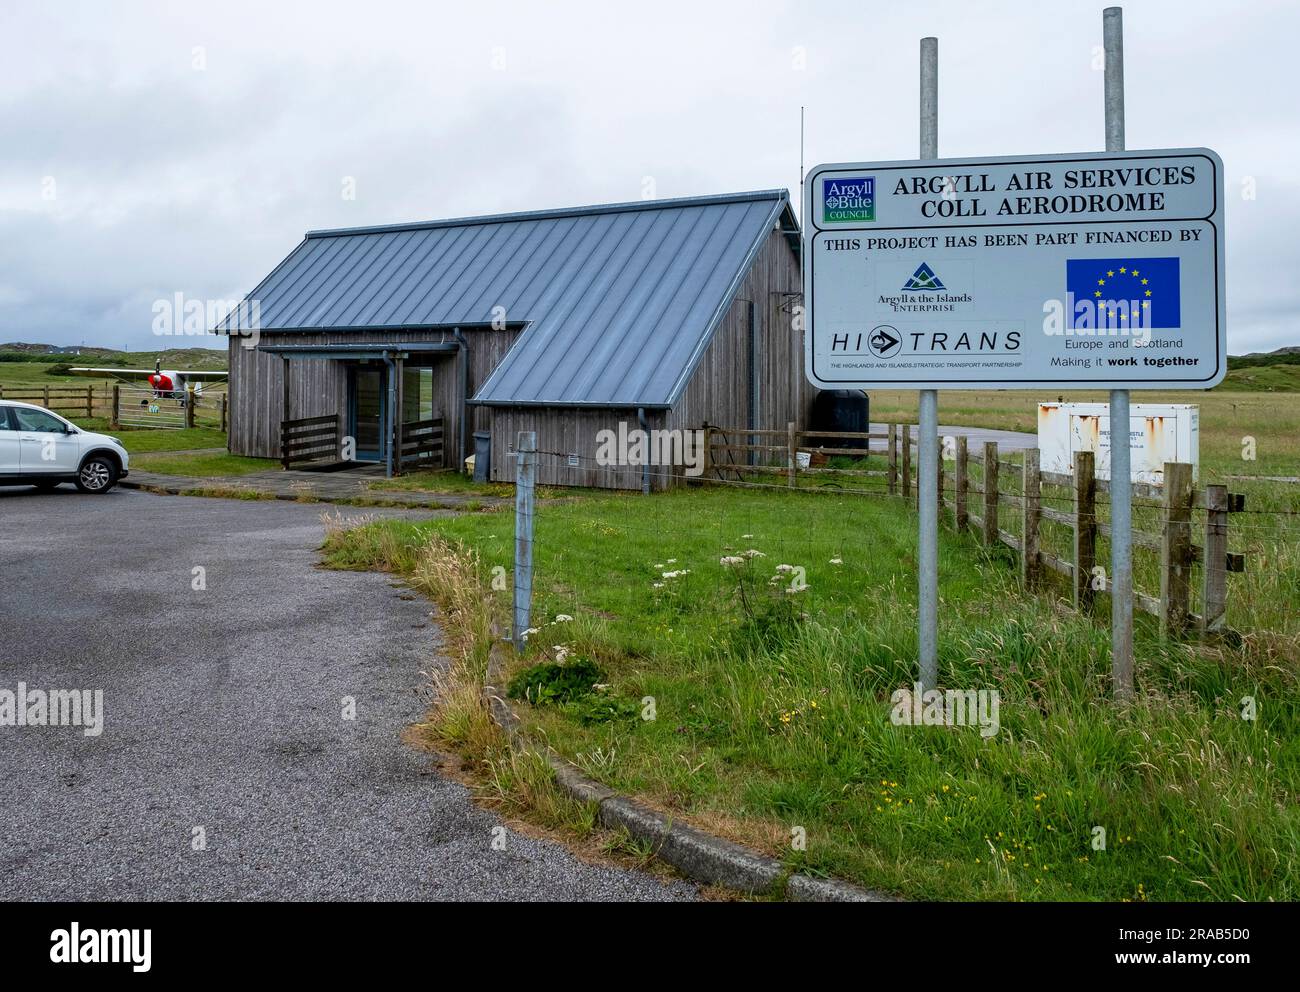 Argyll air services, Coll Aerodrome, Isle of Coll, Scotland. Stock Photo